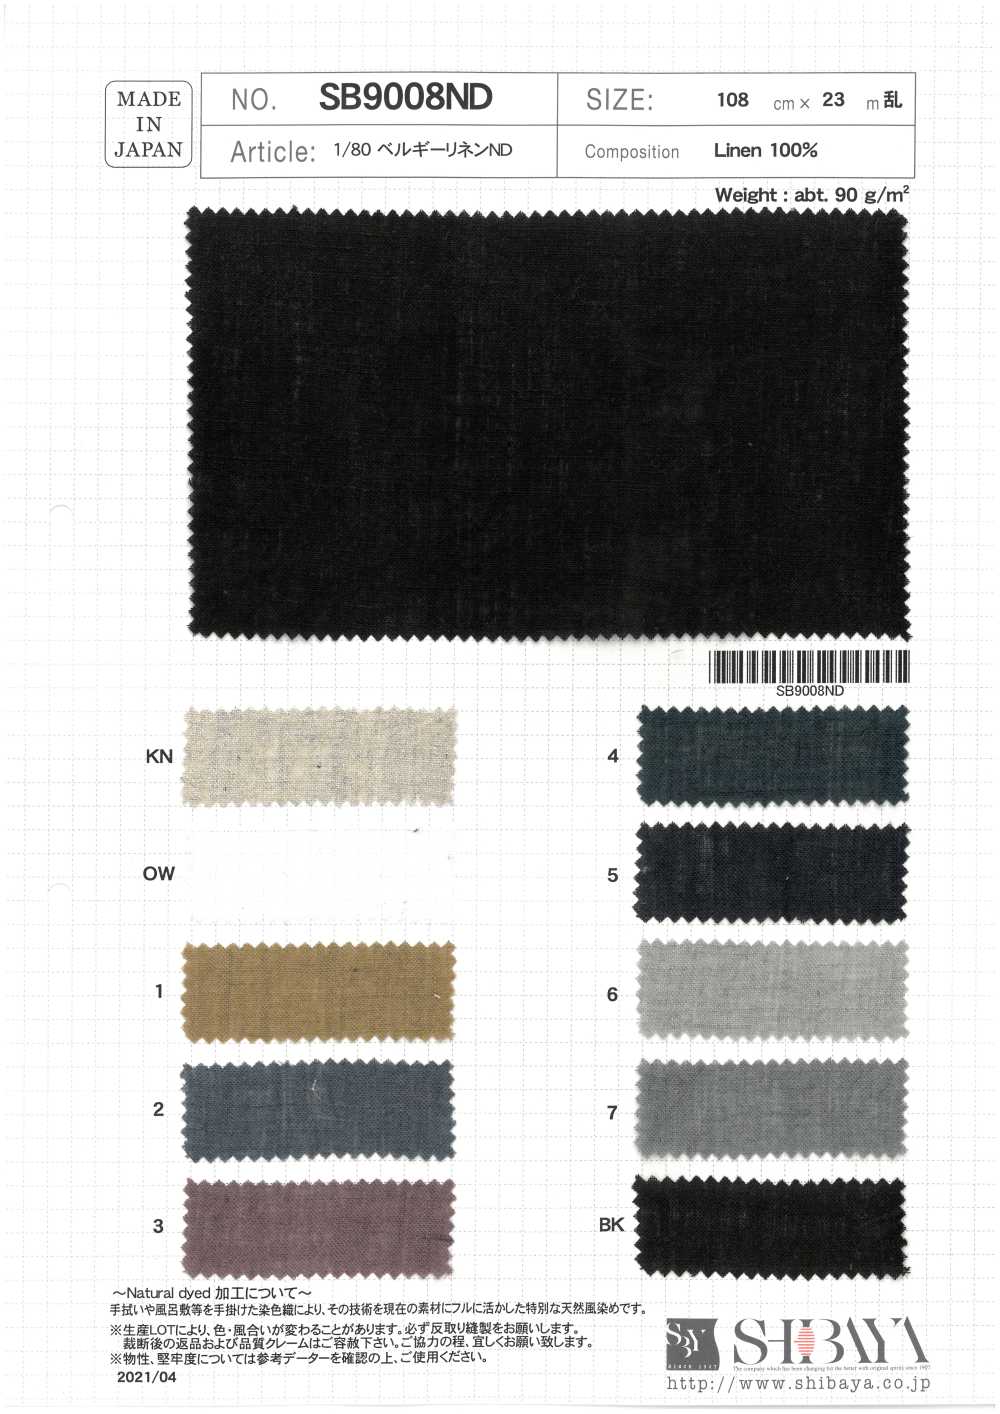 SB9008ND 1/80 Lino Belga ND[Fabrica Textil] SHIBAYA